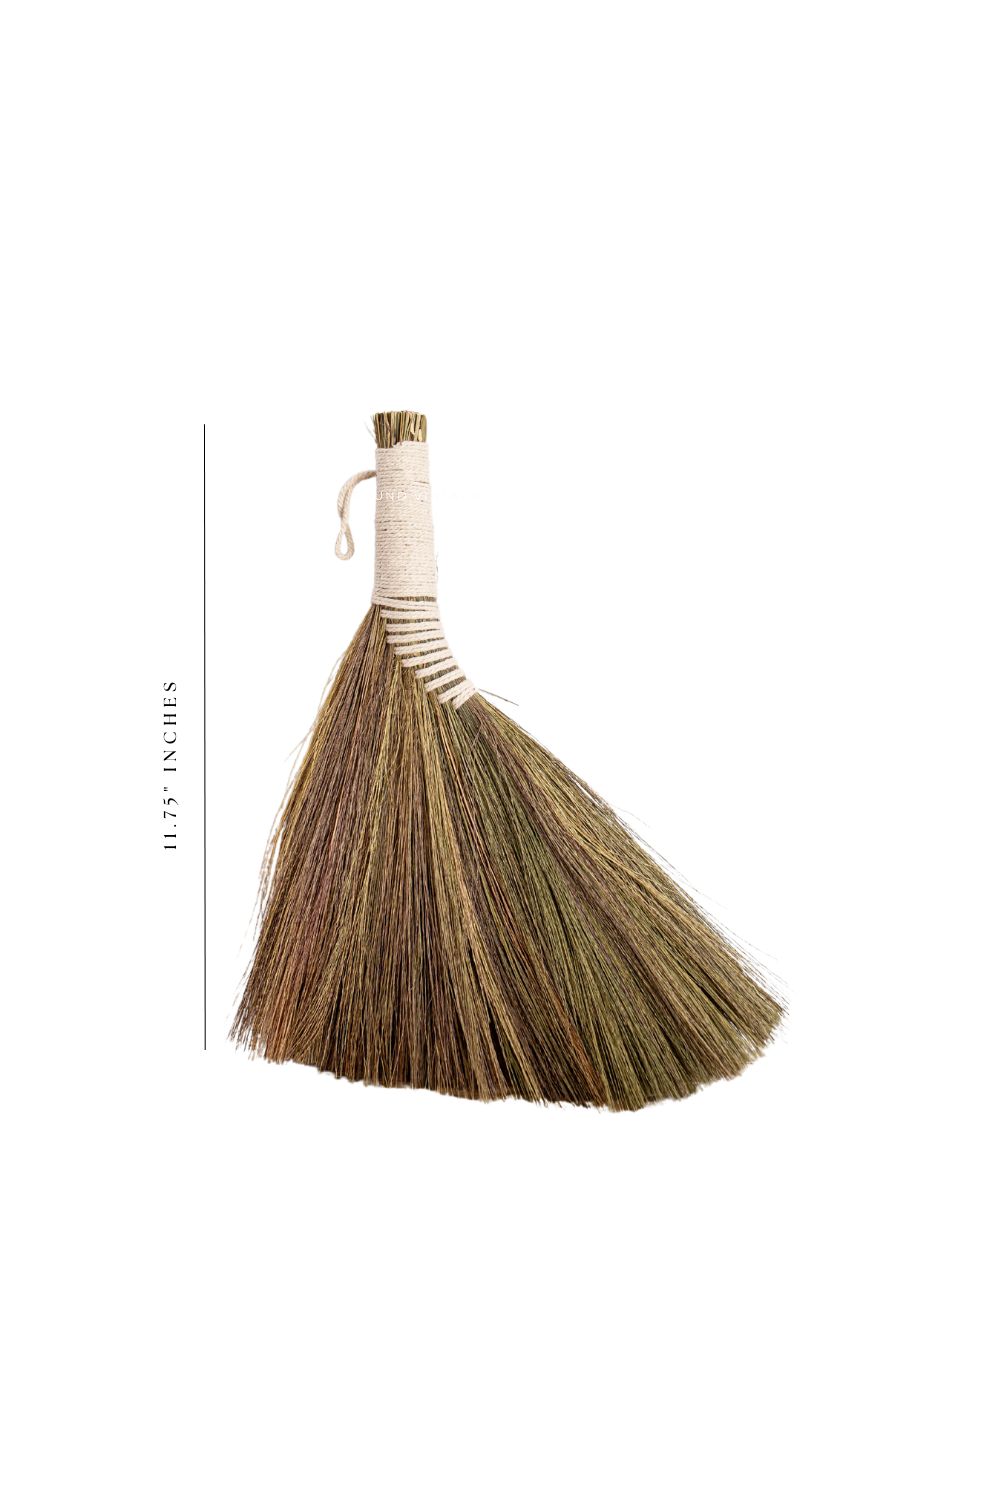 Handmade Brooms Tuxedo - Luxe B Pampas Grass  Vintage Home Decor Shop Luxe B Co Instagram